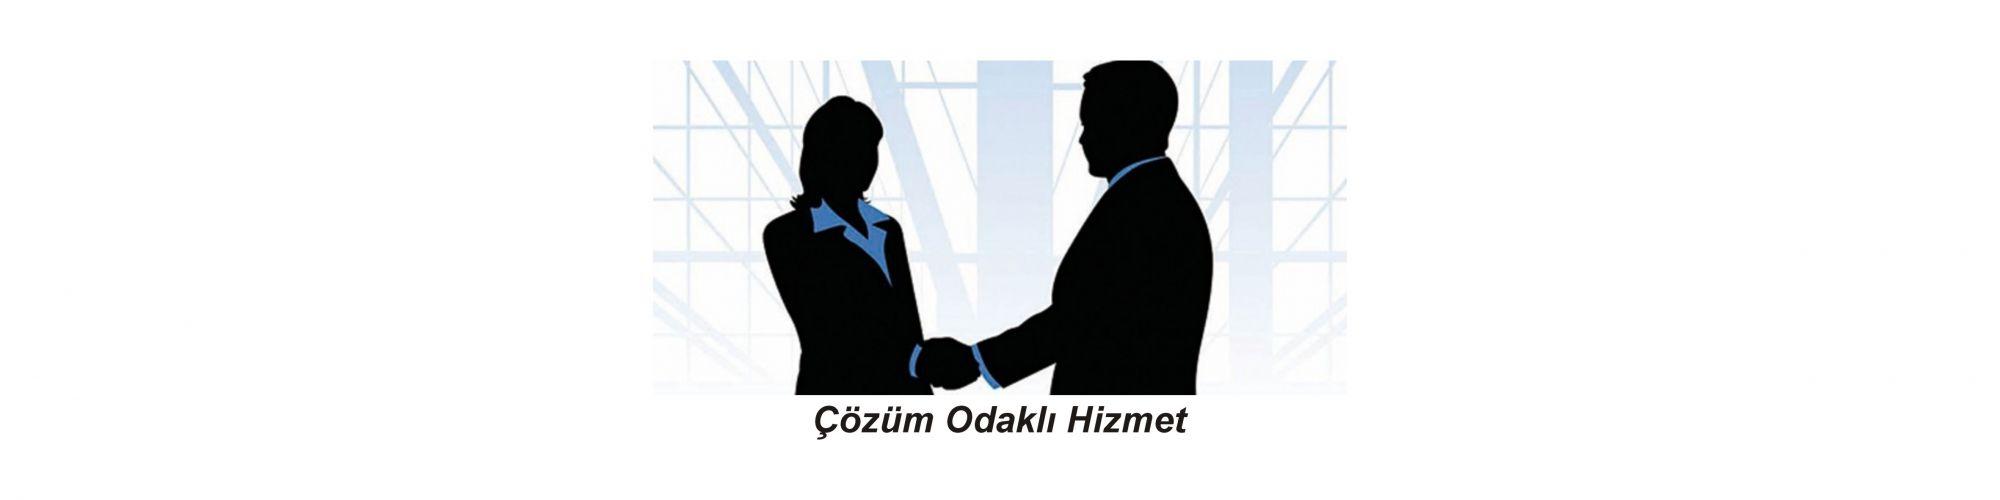 Kaşif Patent Ofisi | Türk Patent Enstitüsü Vekilliği